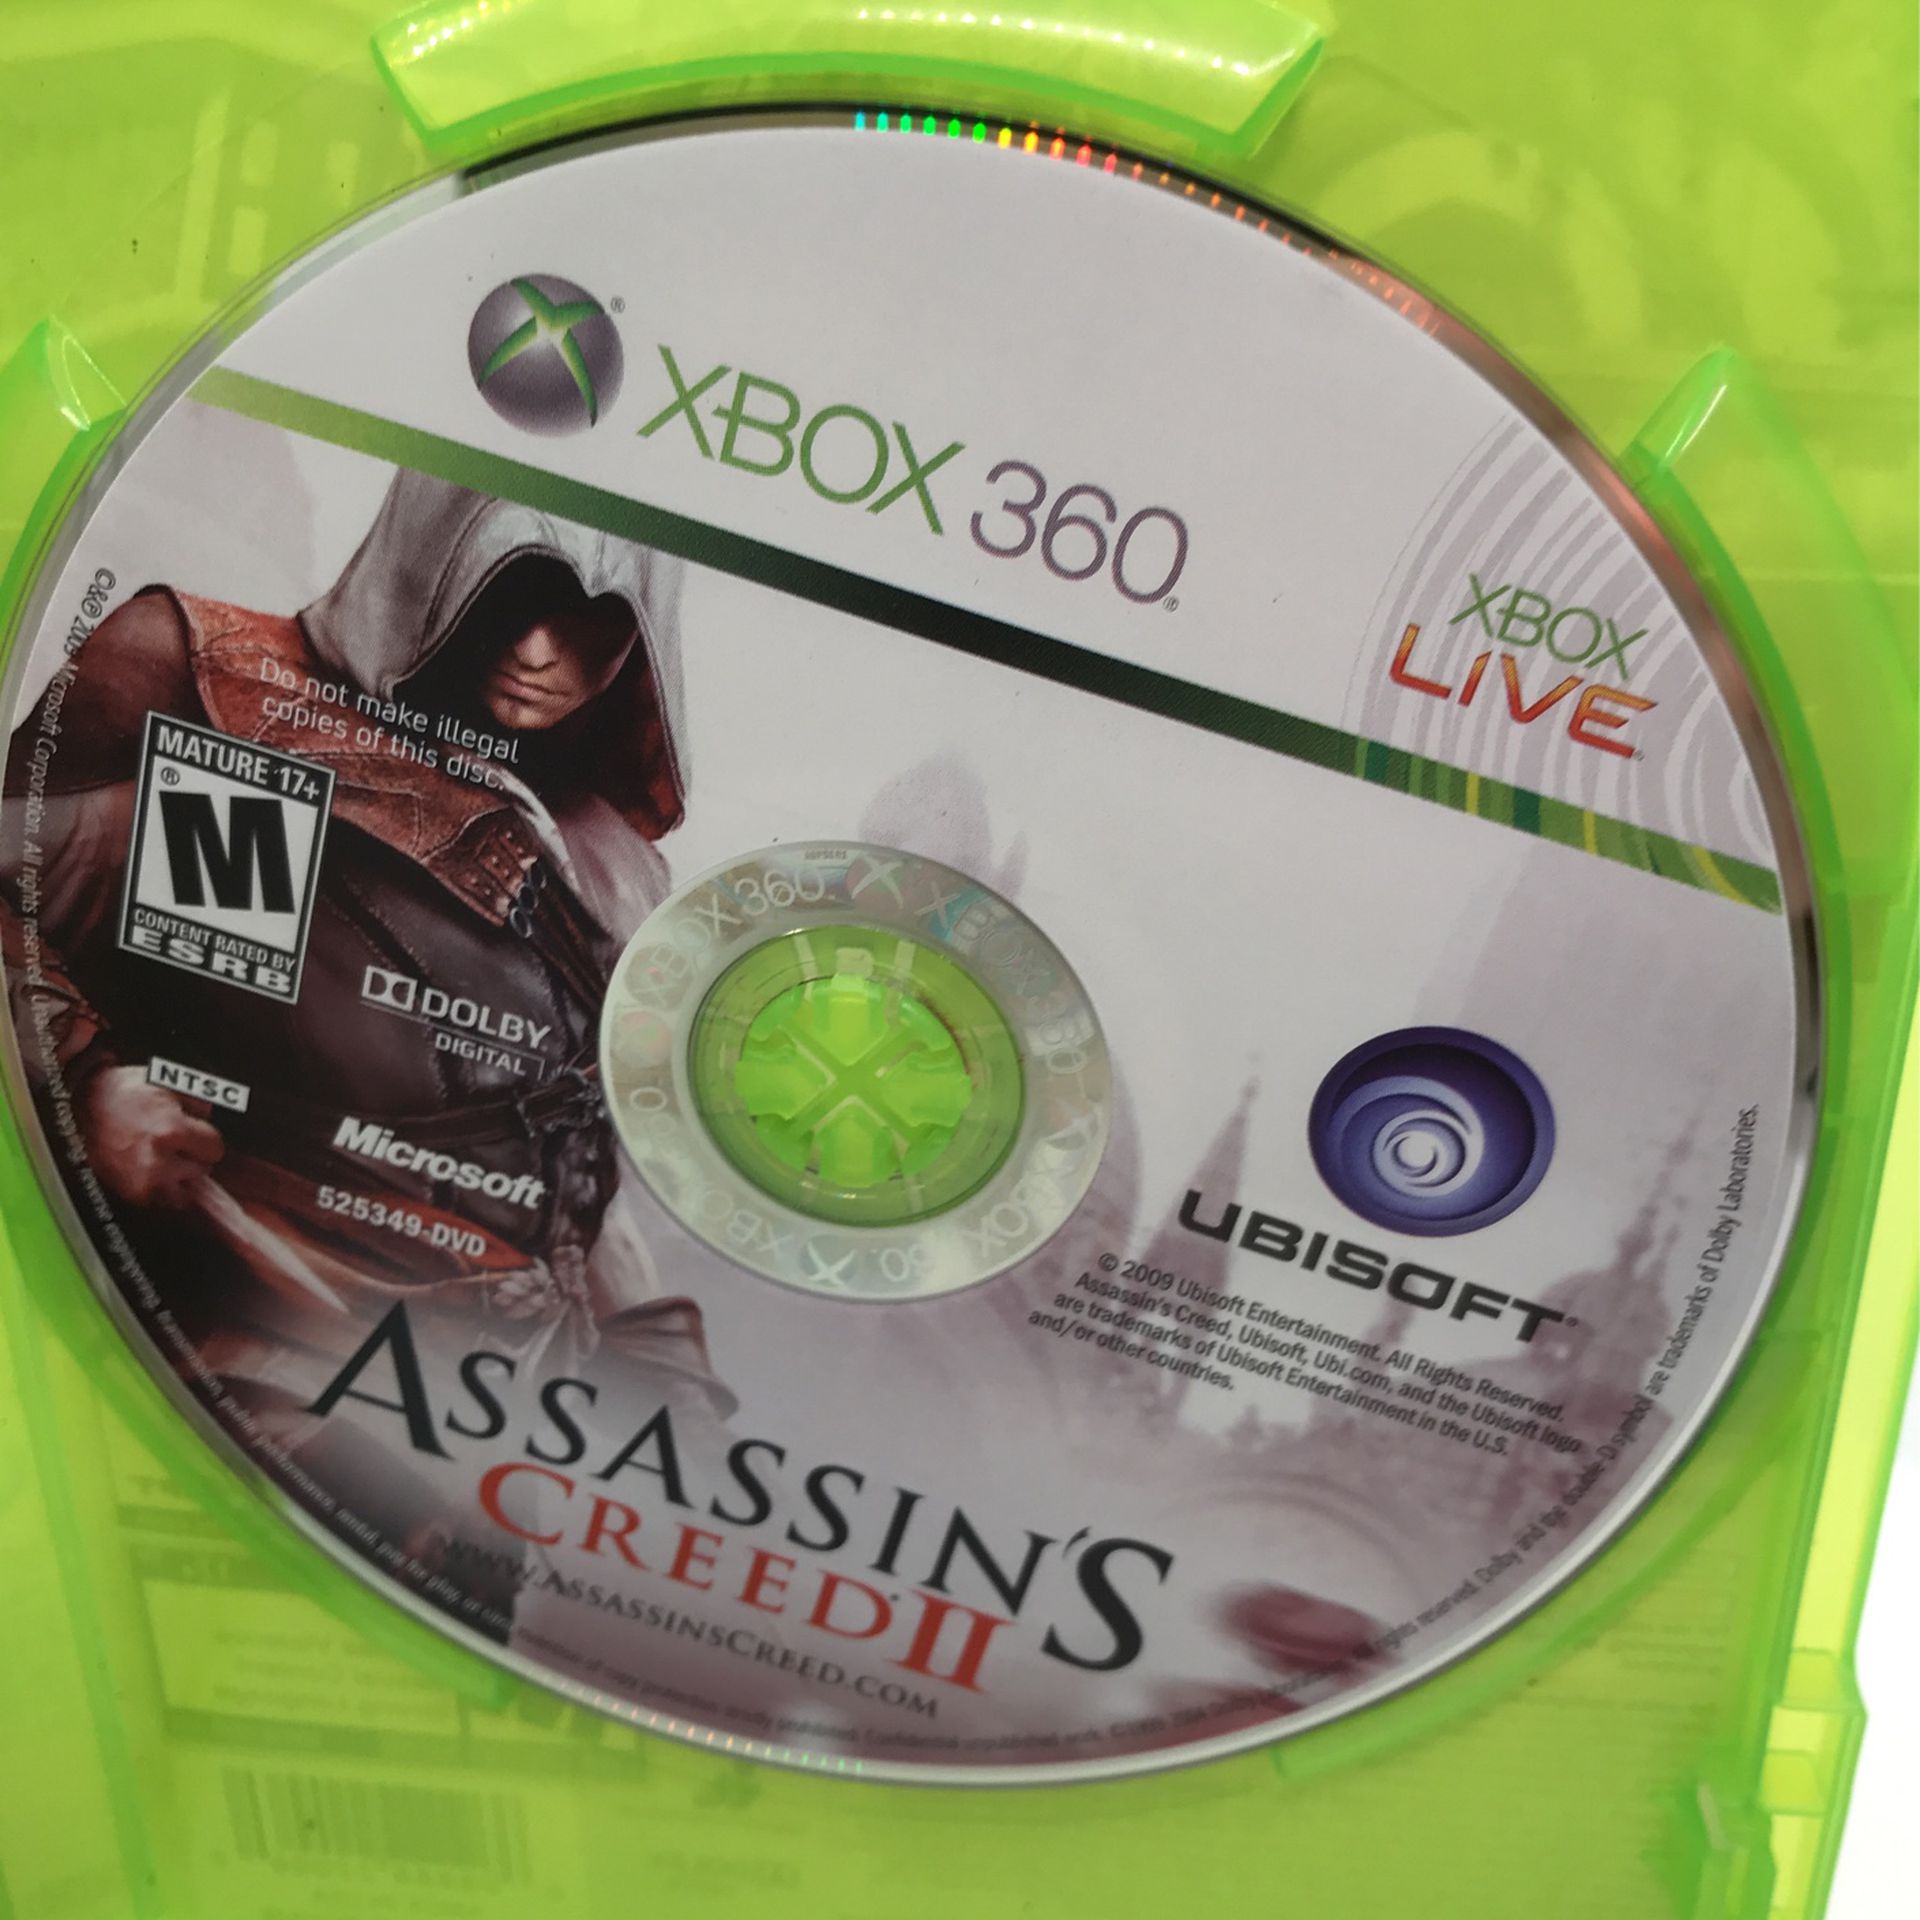 Assassins Creed II Xbox 360 Game